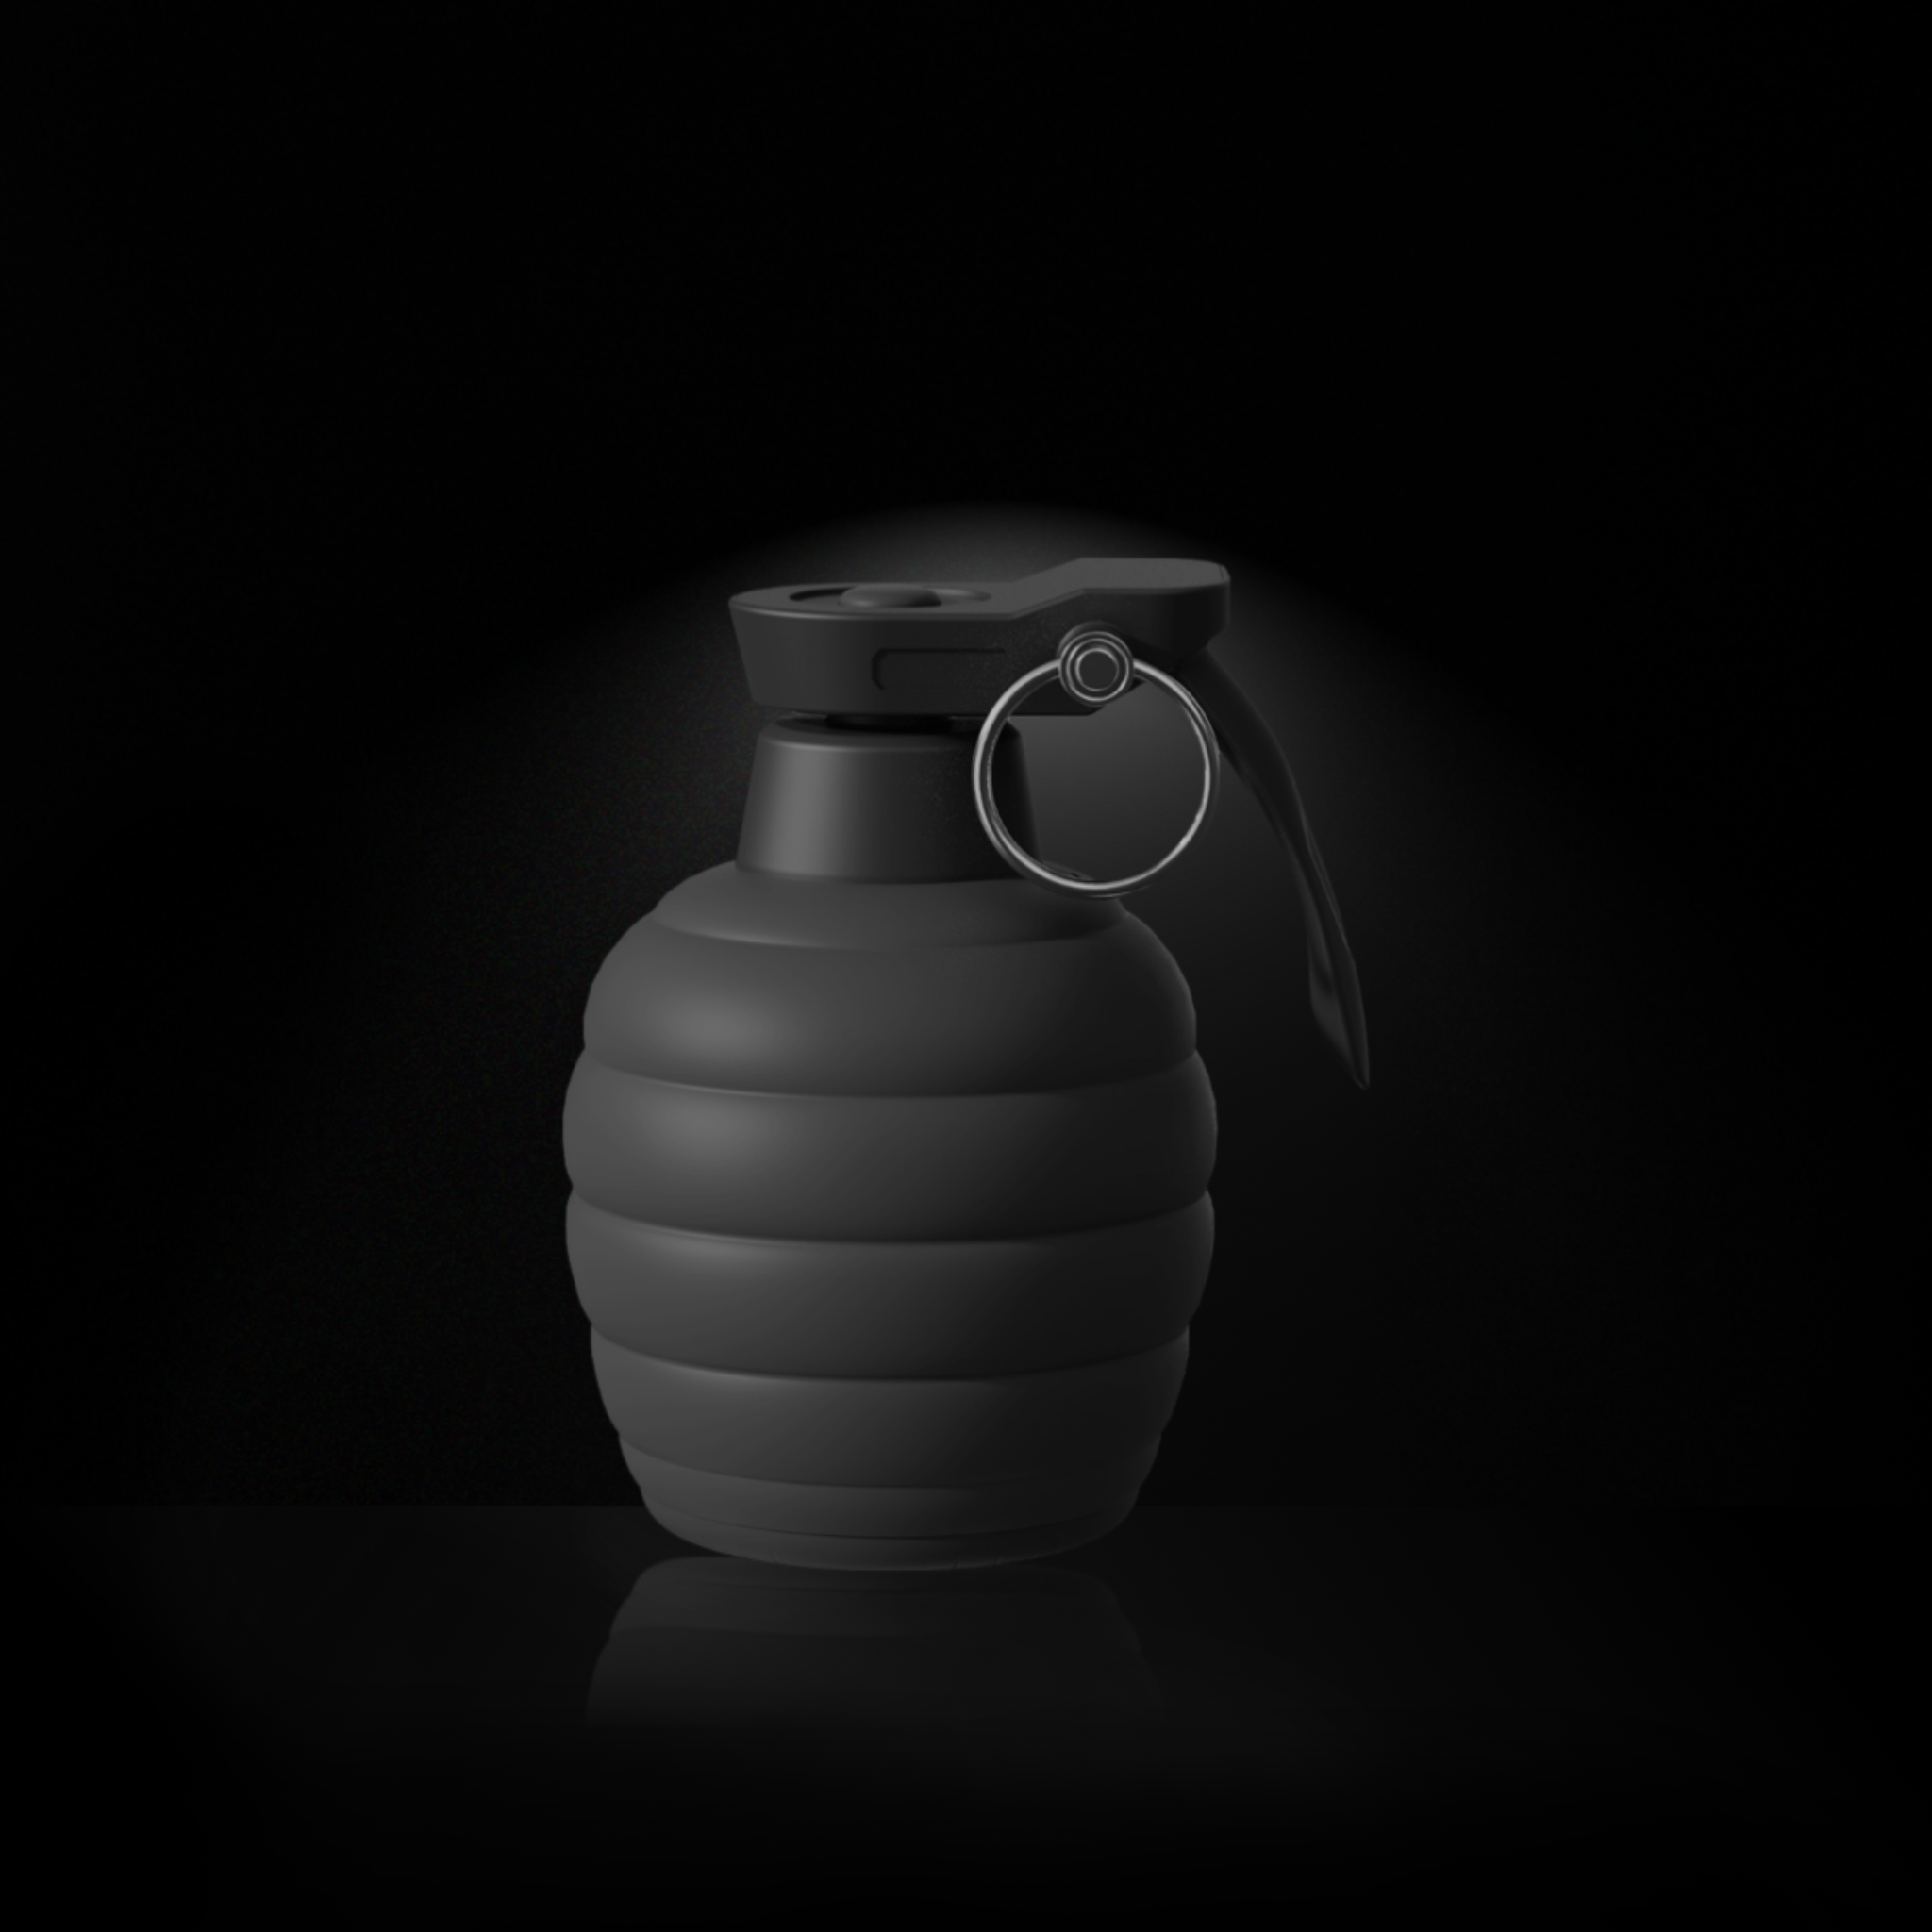 Grenade Stroker: Command Your Satisfaction with the Grenade Masturbator